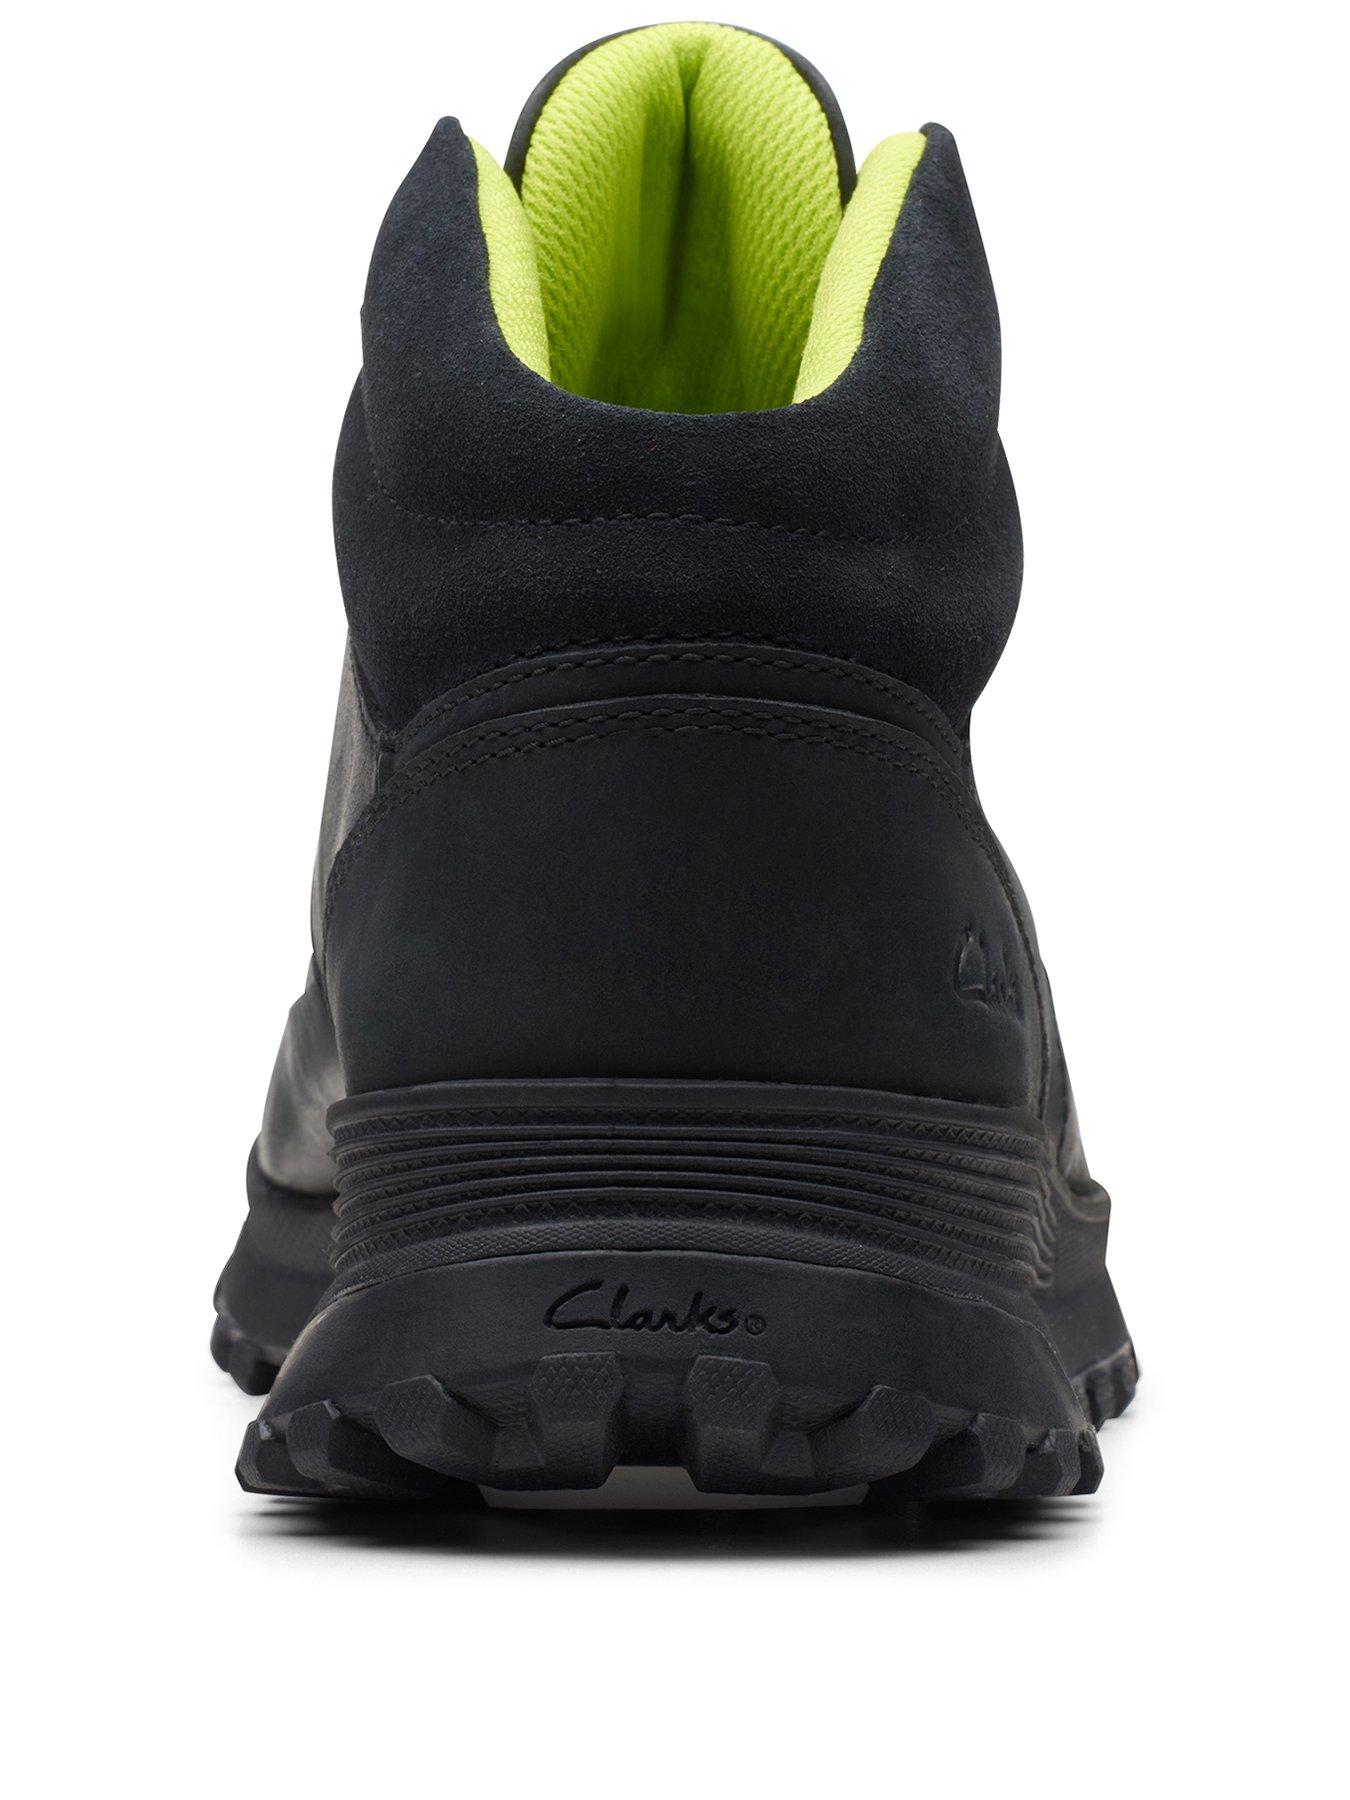 Clarks Atl Trek Mid Boots - Black | very.co.uk